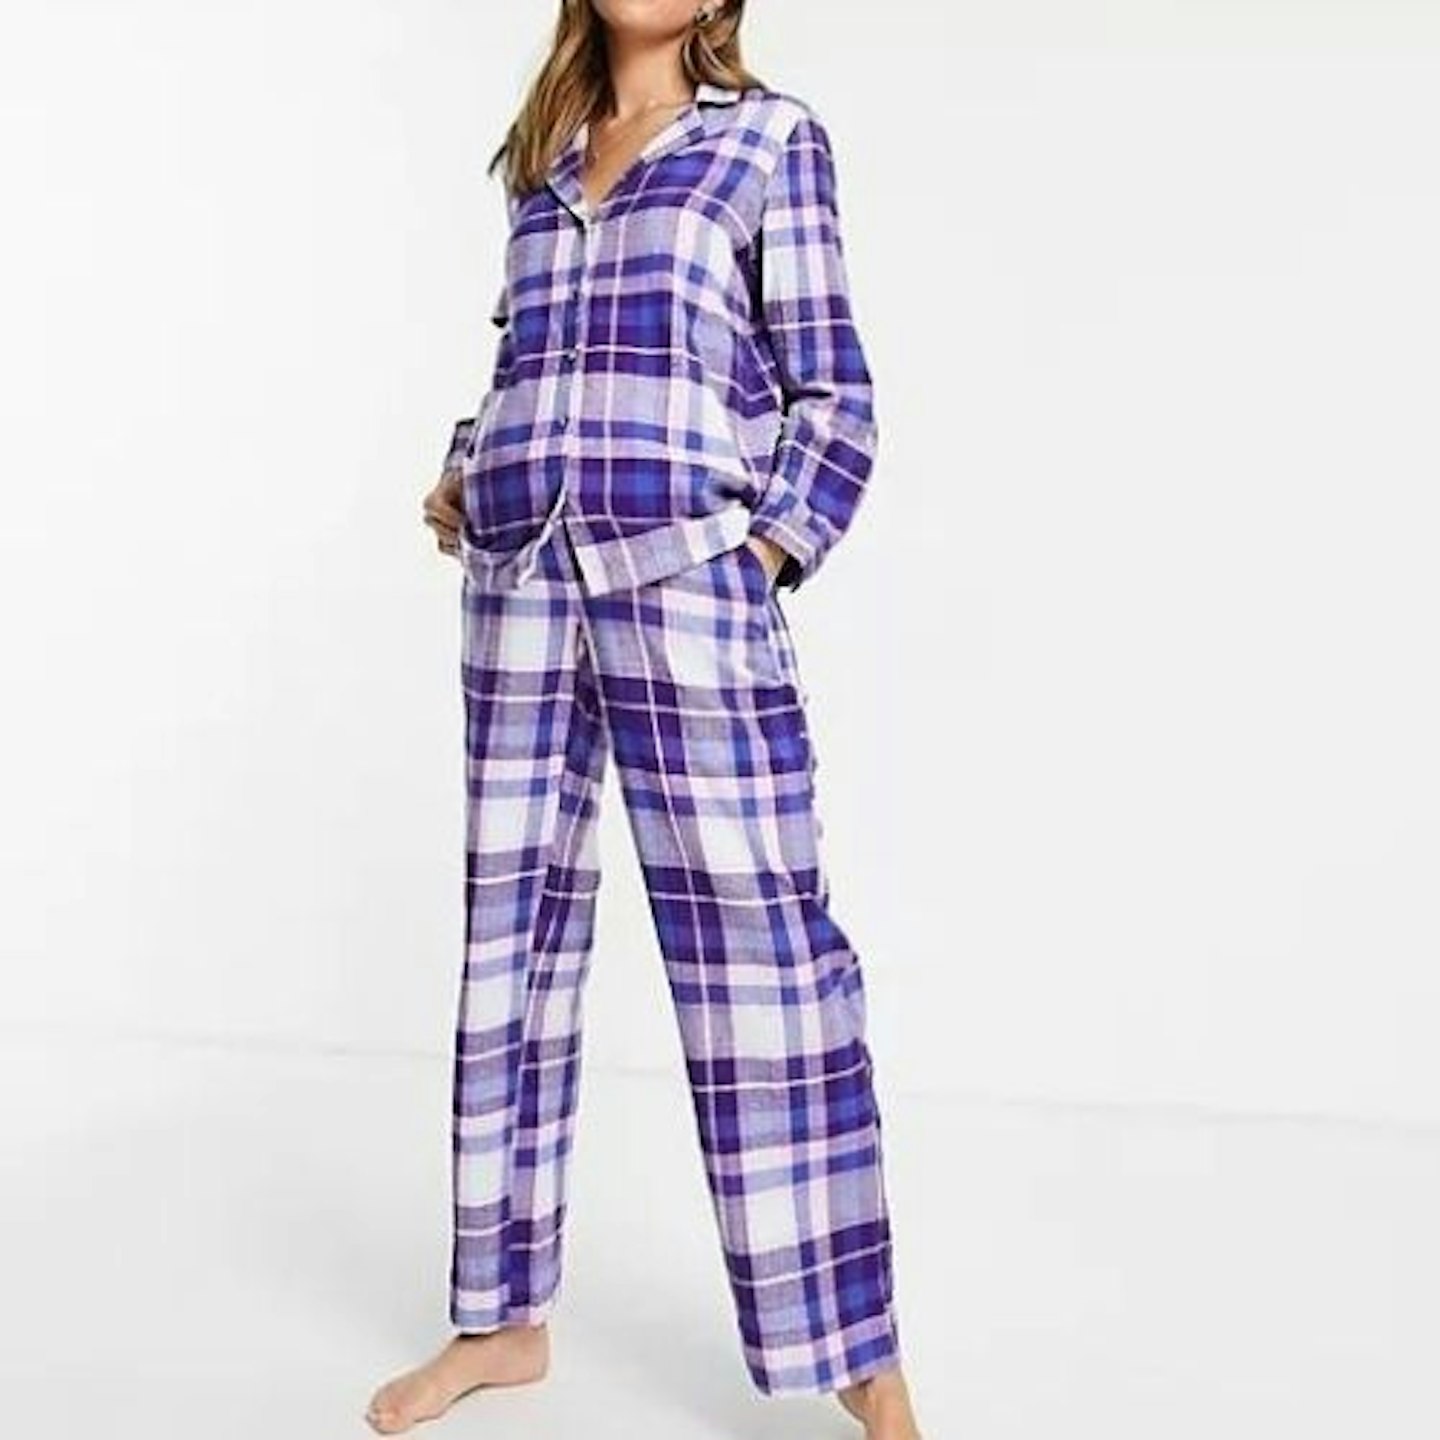 Pieces Maternity long sleeve pyjama set in purple check